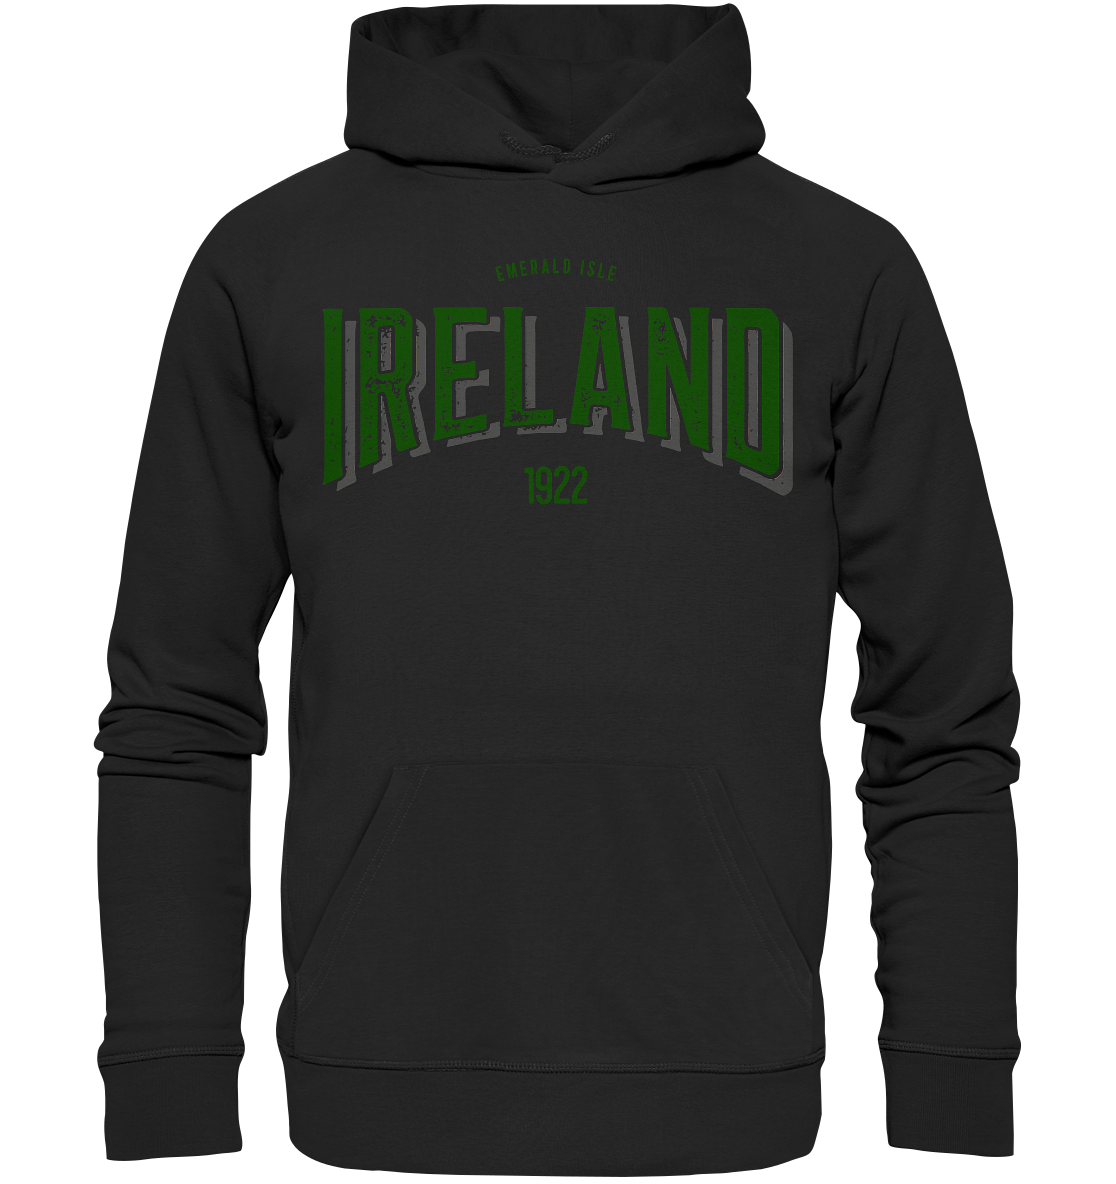 Ireland "Emerald Isle 1922" - Premium Unisex Hoodie